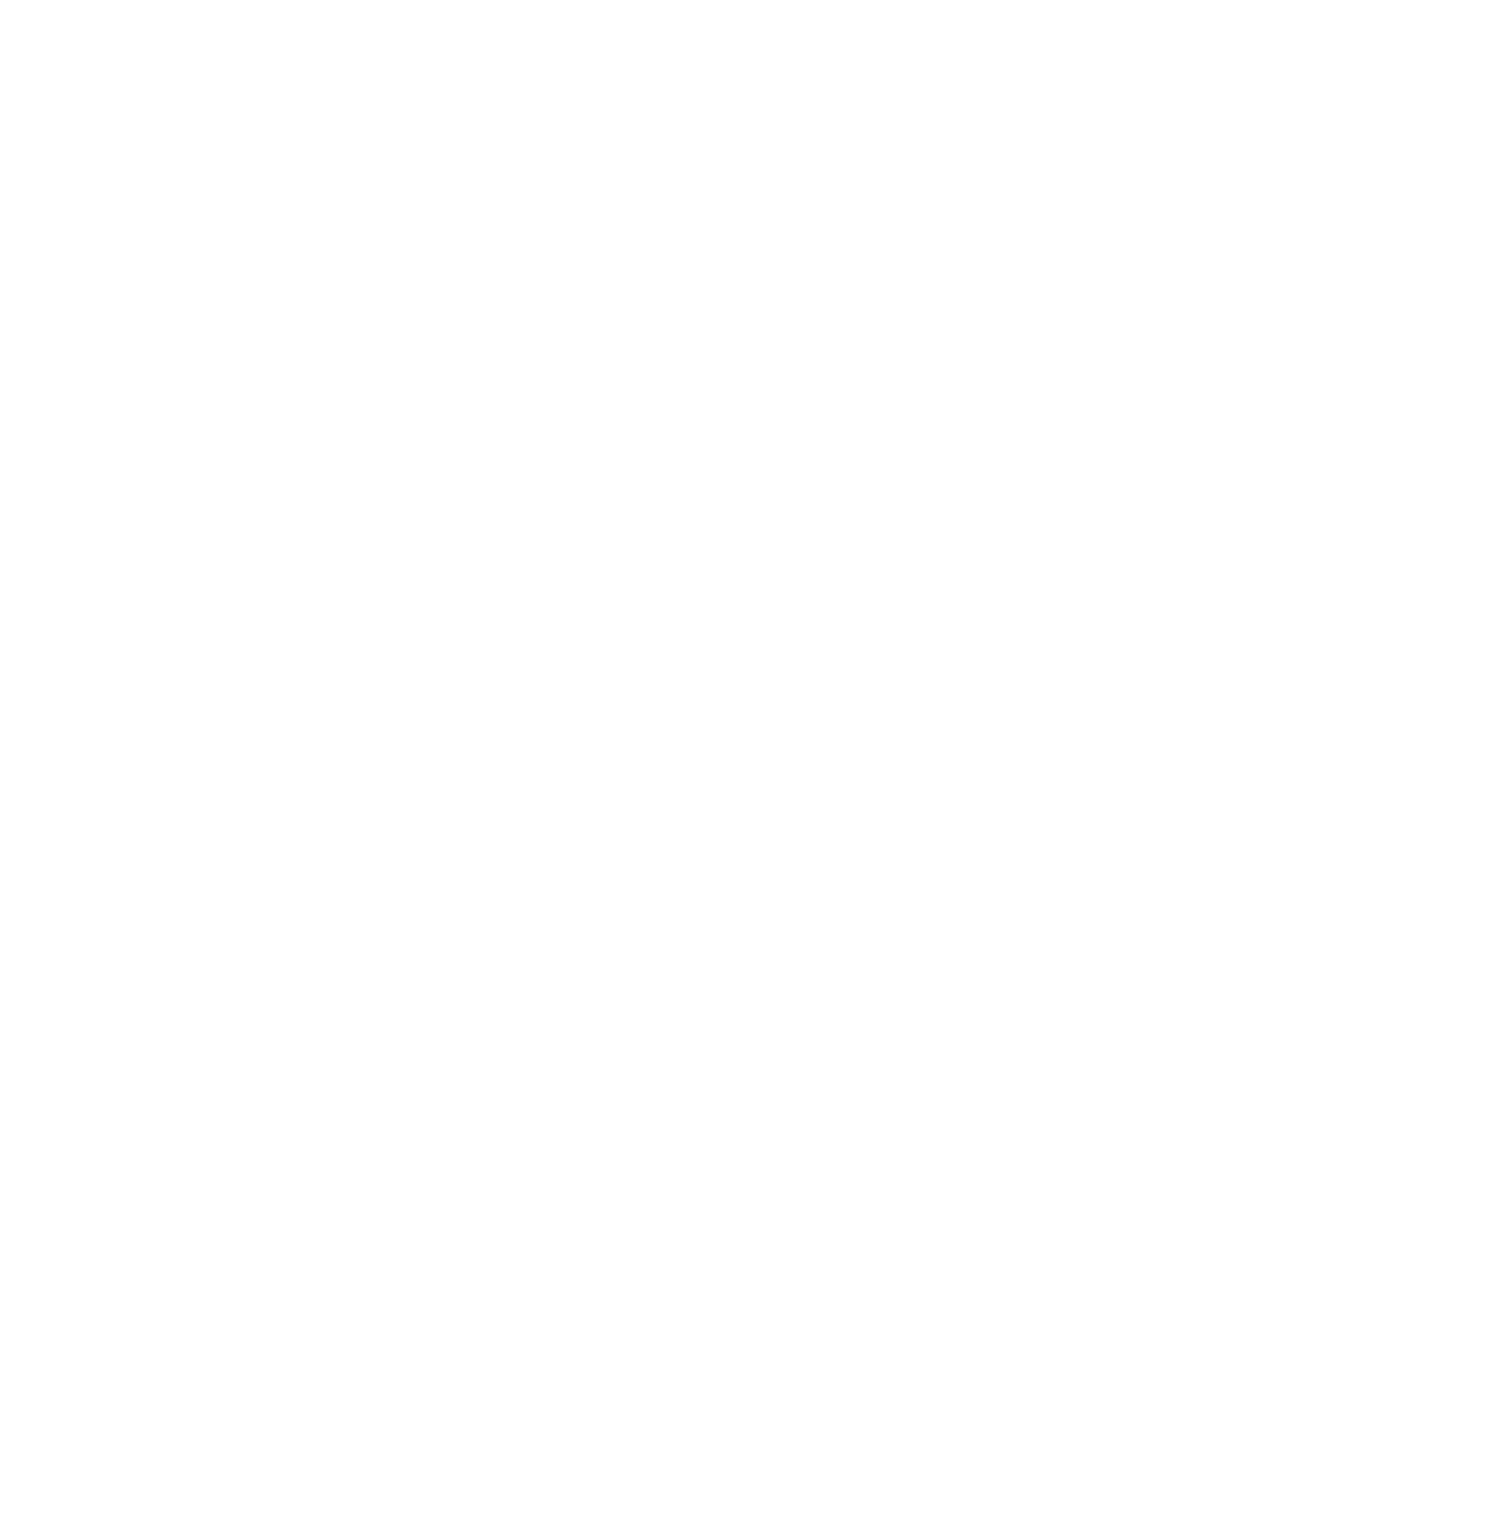 Pangaea Logistics Solutions logo large for dark backgrounds (transparent PNG)